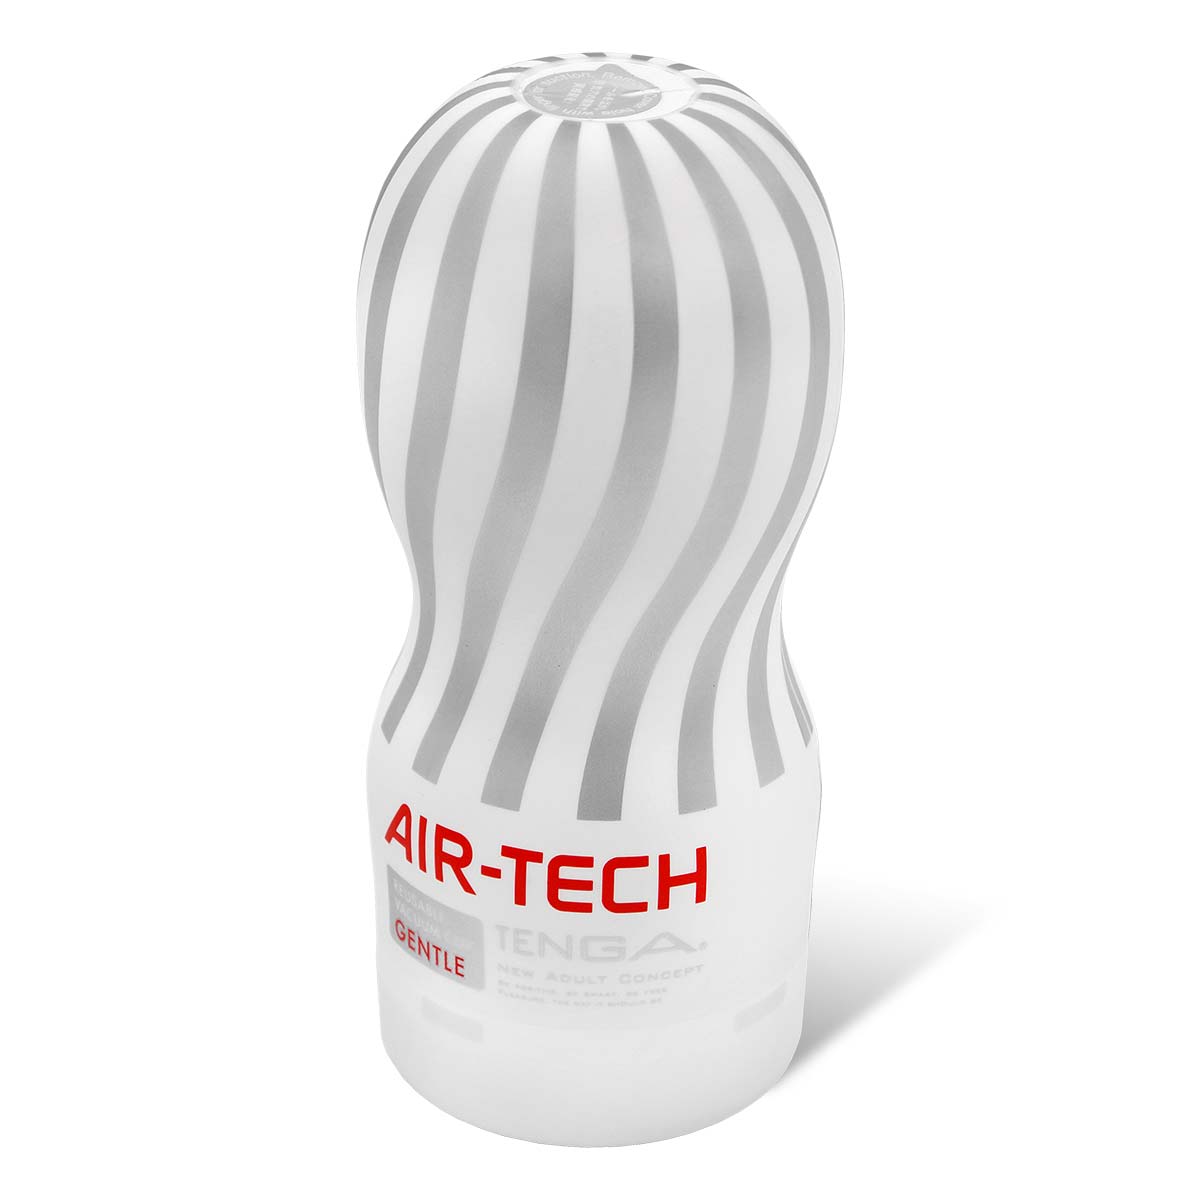 TENGA AIR-TECH 重複使用型真空杯 柔軟型